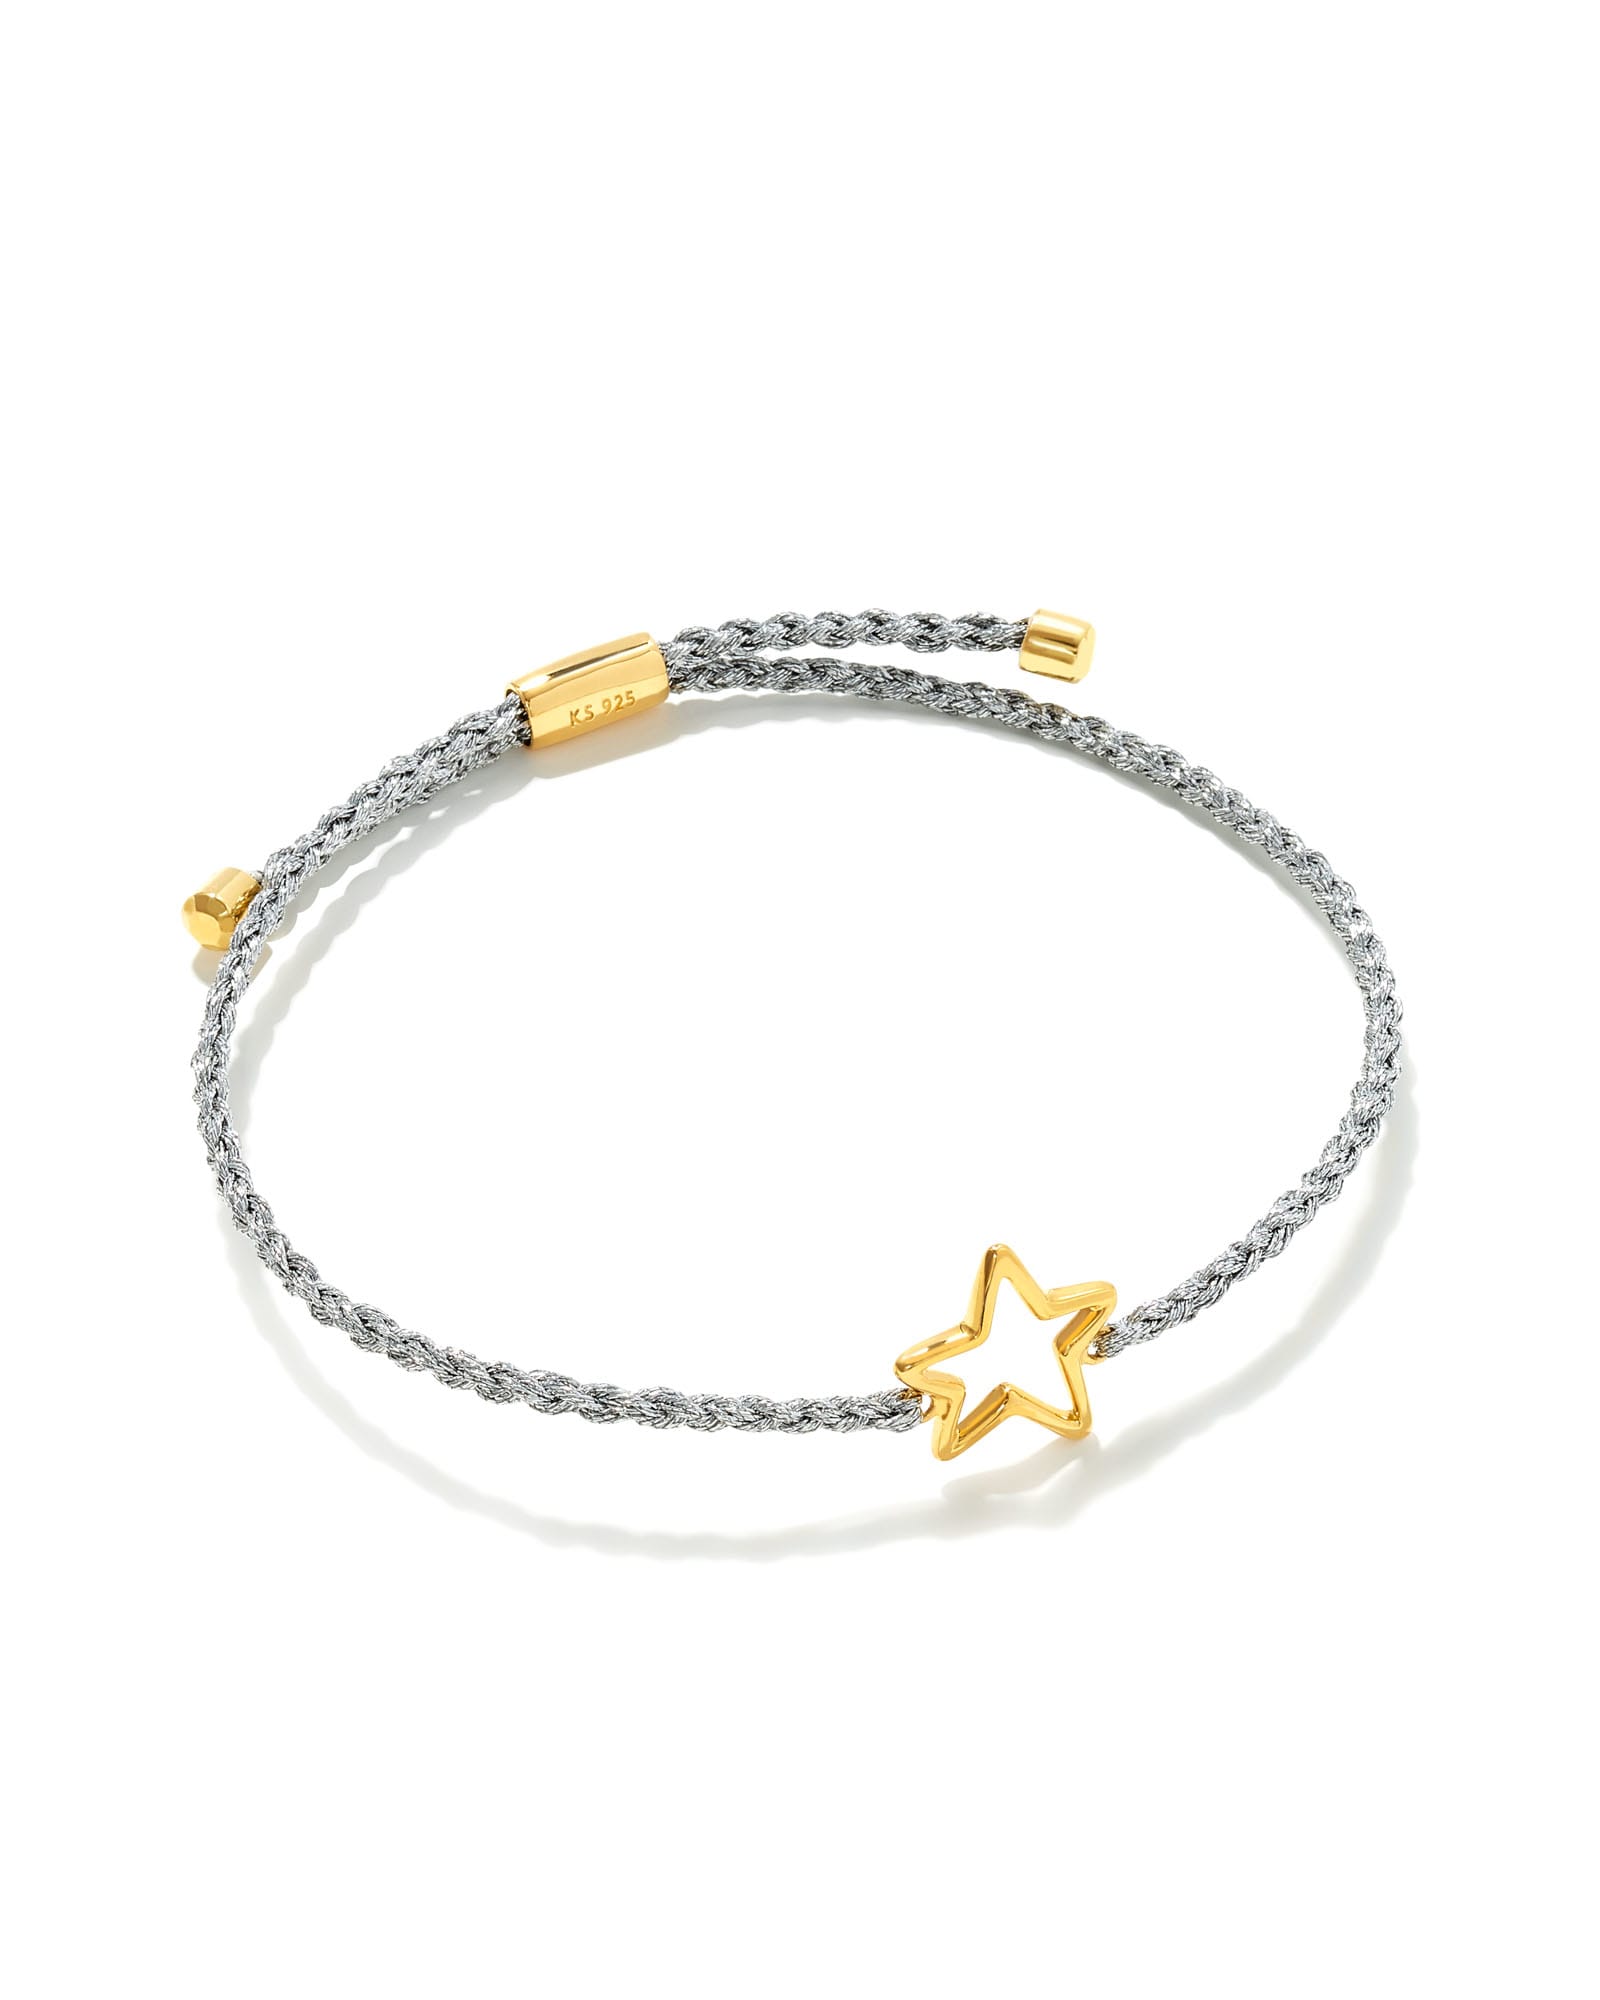 Open Star Sterling Silver Corded Bracelet in Bright Magenta